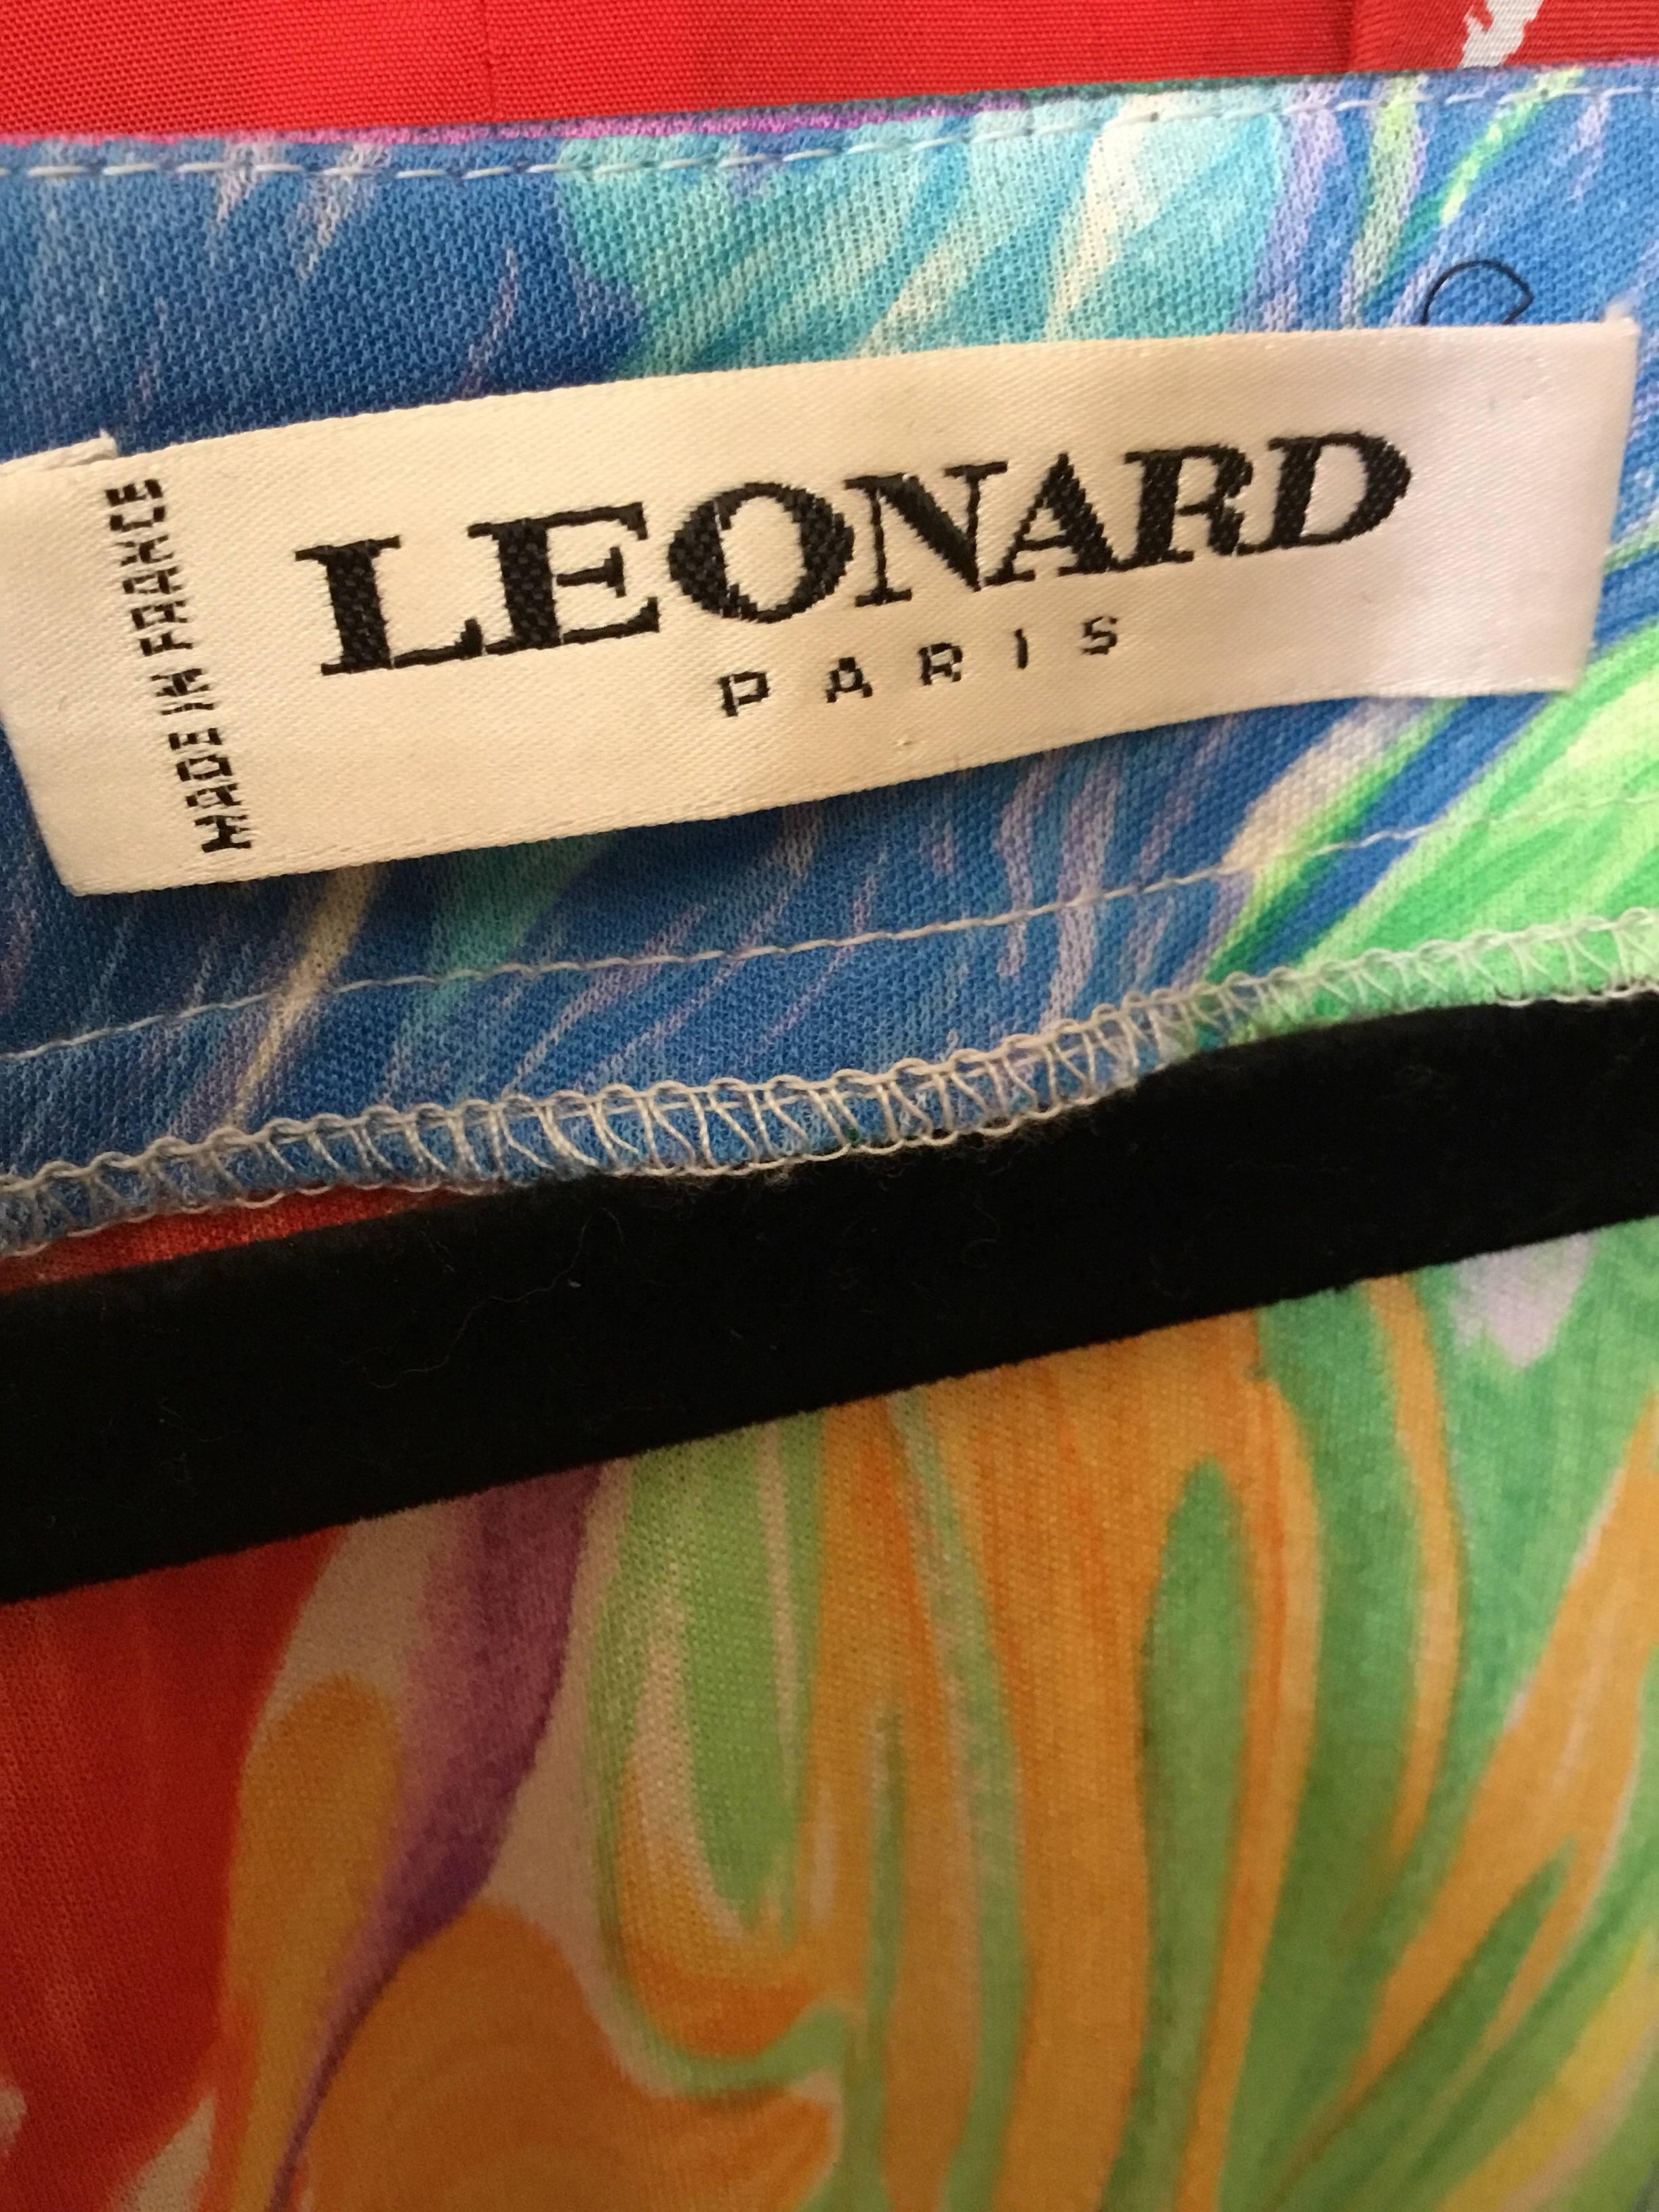 Leonard Paris Firework Print Dress In Excellent Condition For Sale In Carmel, CA